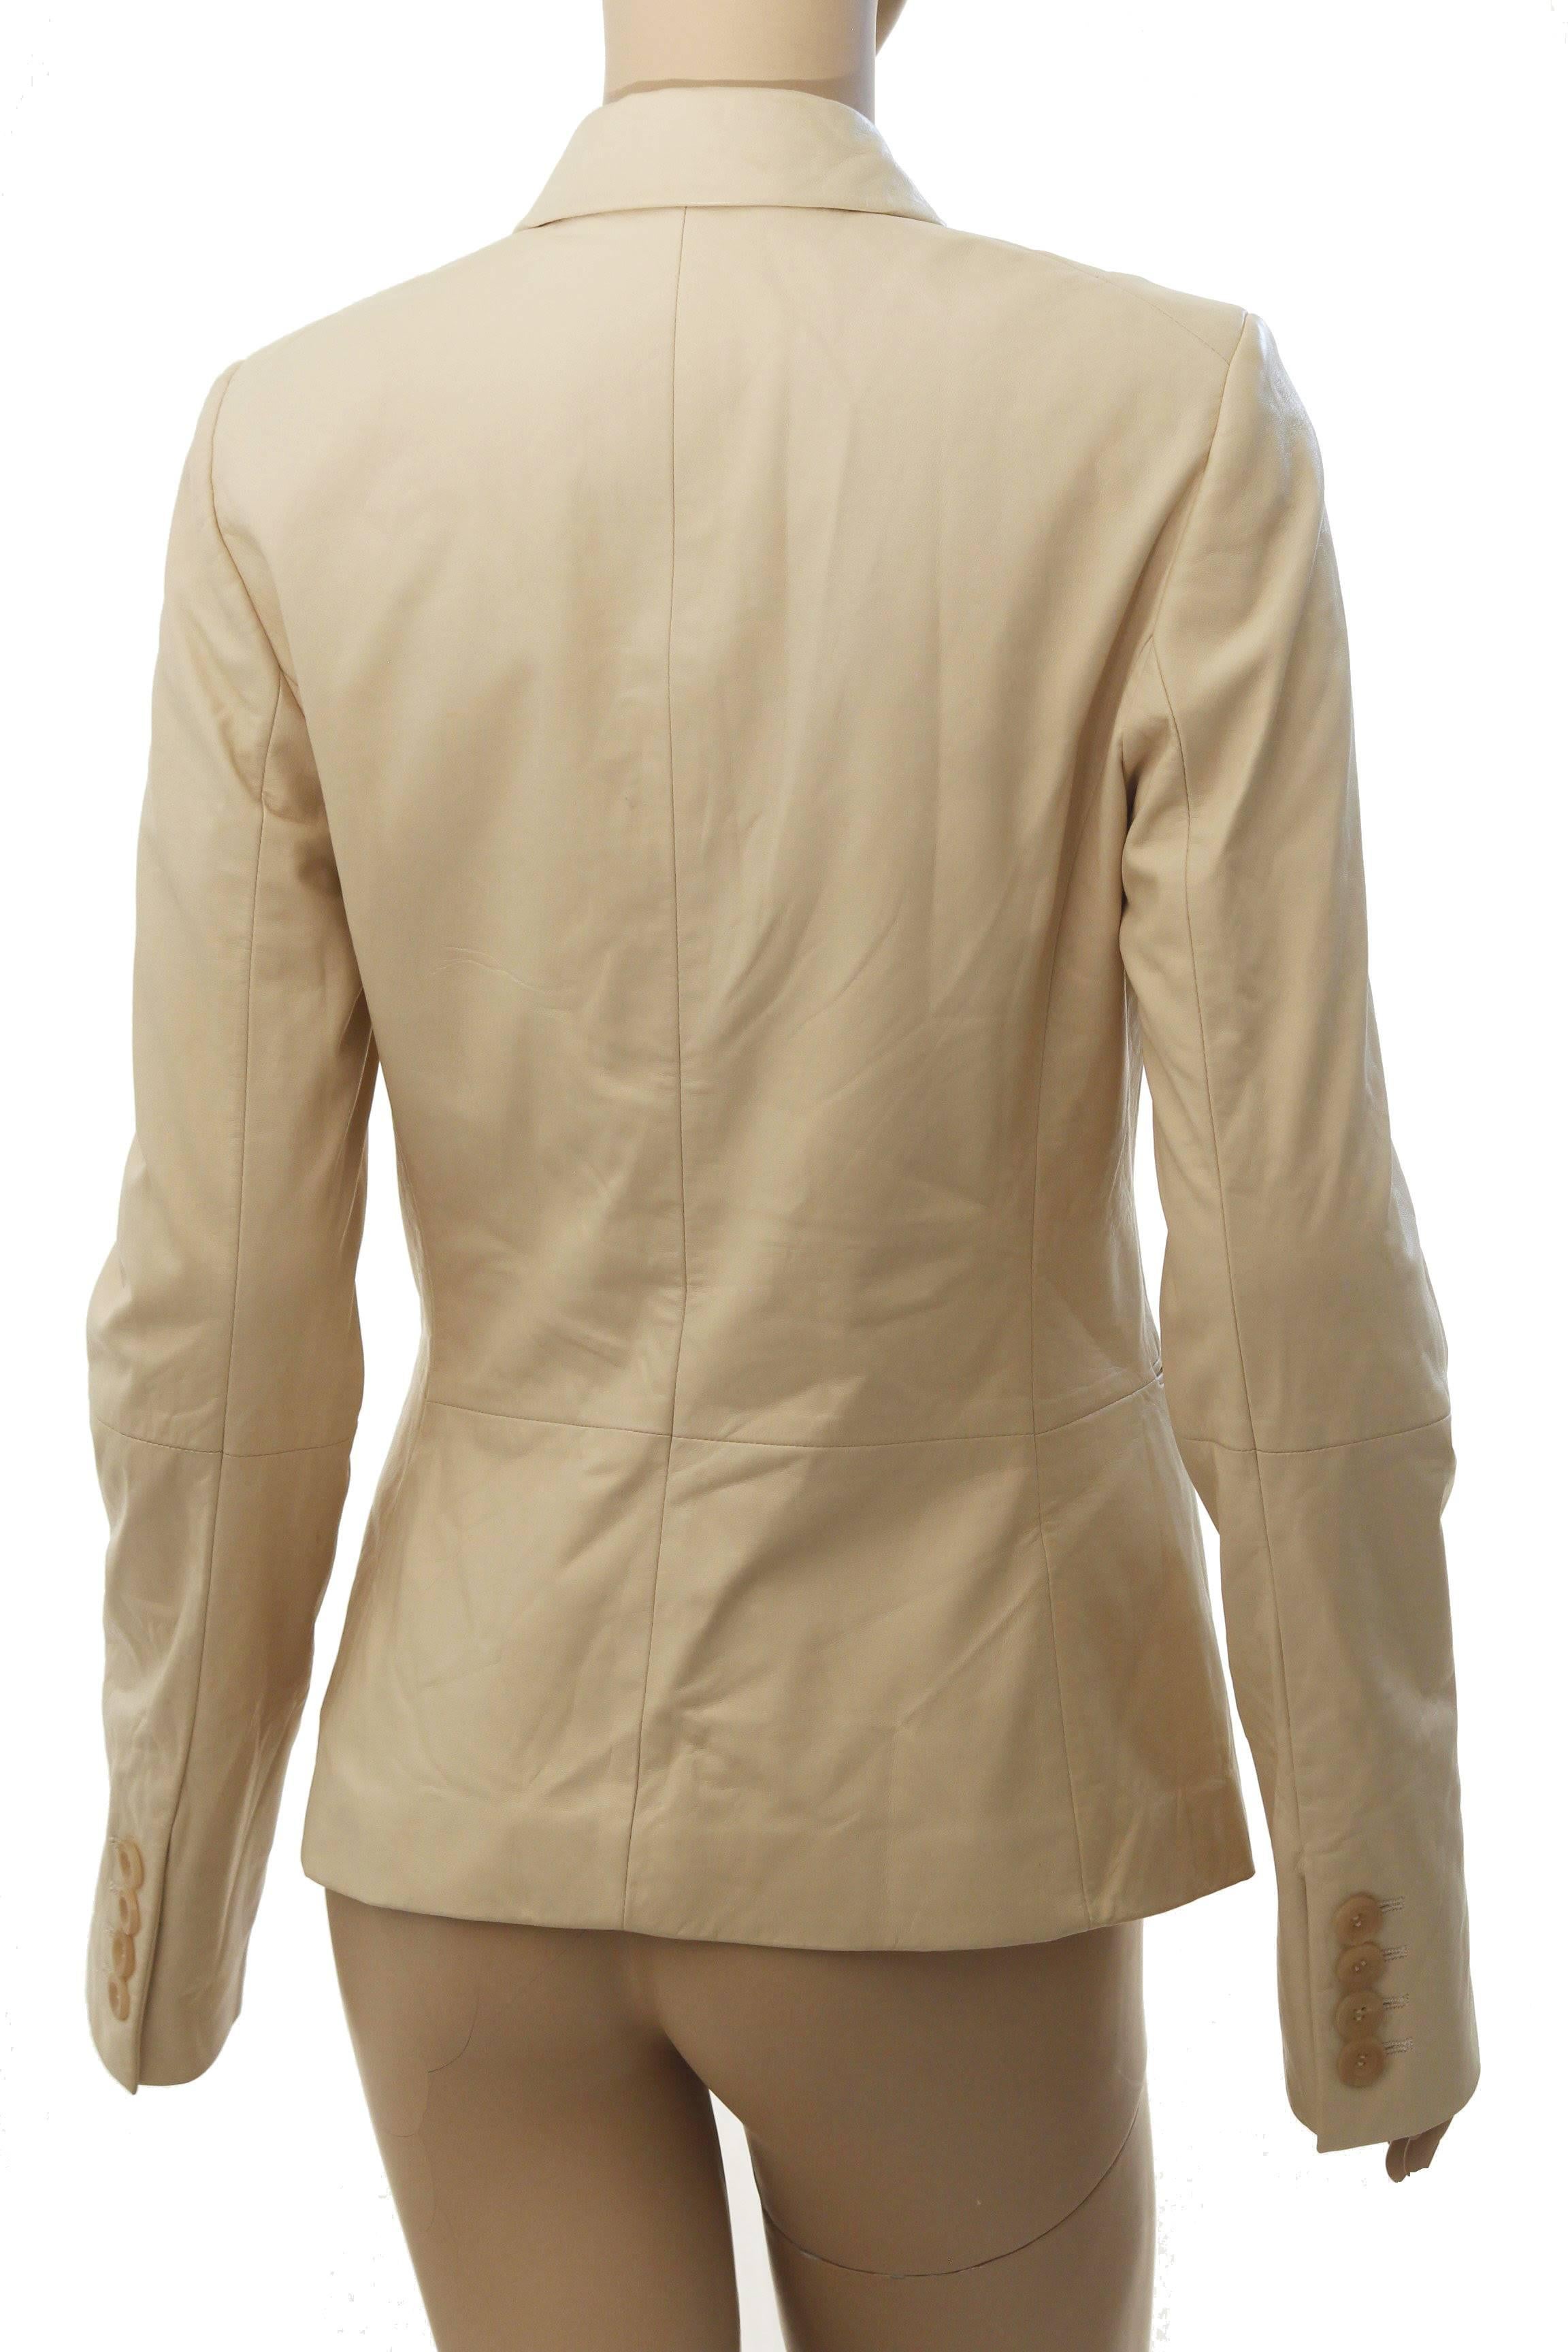 Women's Salvatore Ferragamo Jacket Soft Leather Vanilla Cream Blazer Size 44 Italy For Sale